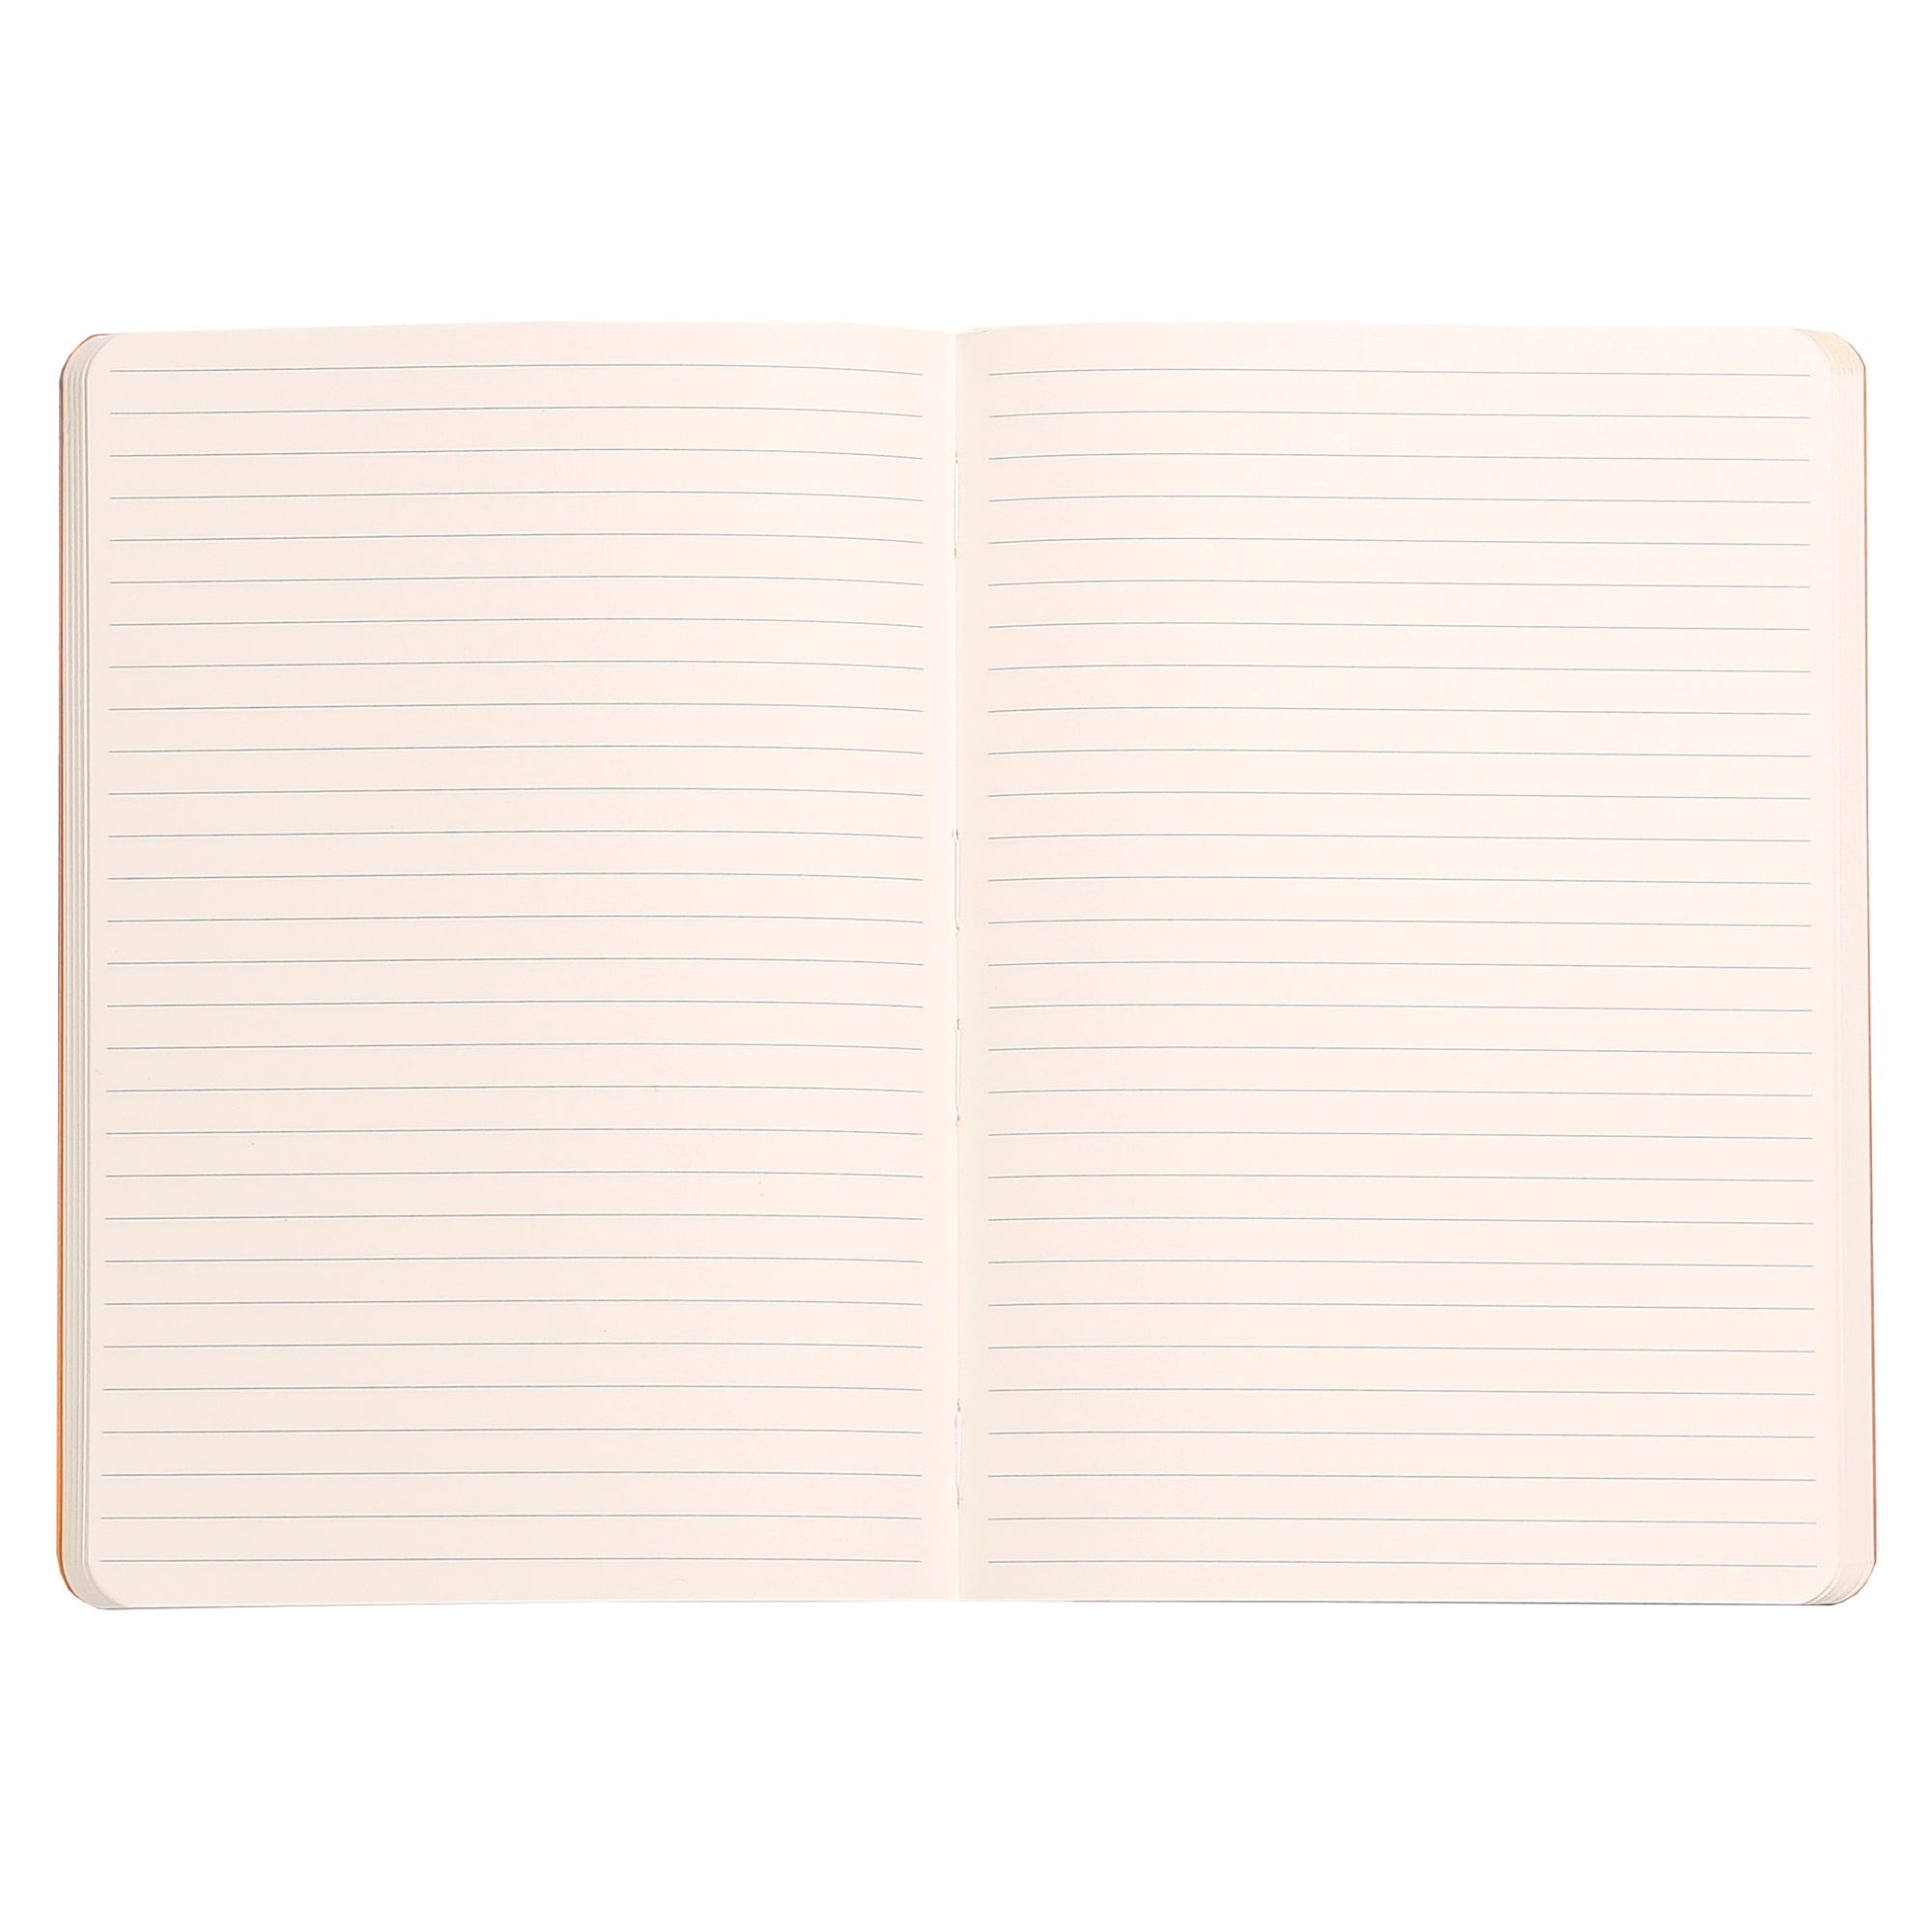 Rhodia Notesbog Rhodiarama Notebook Guld SC L